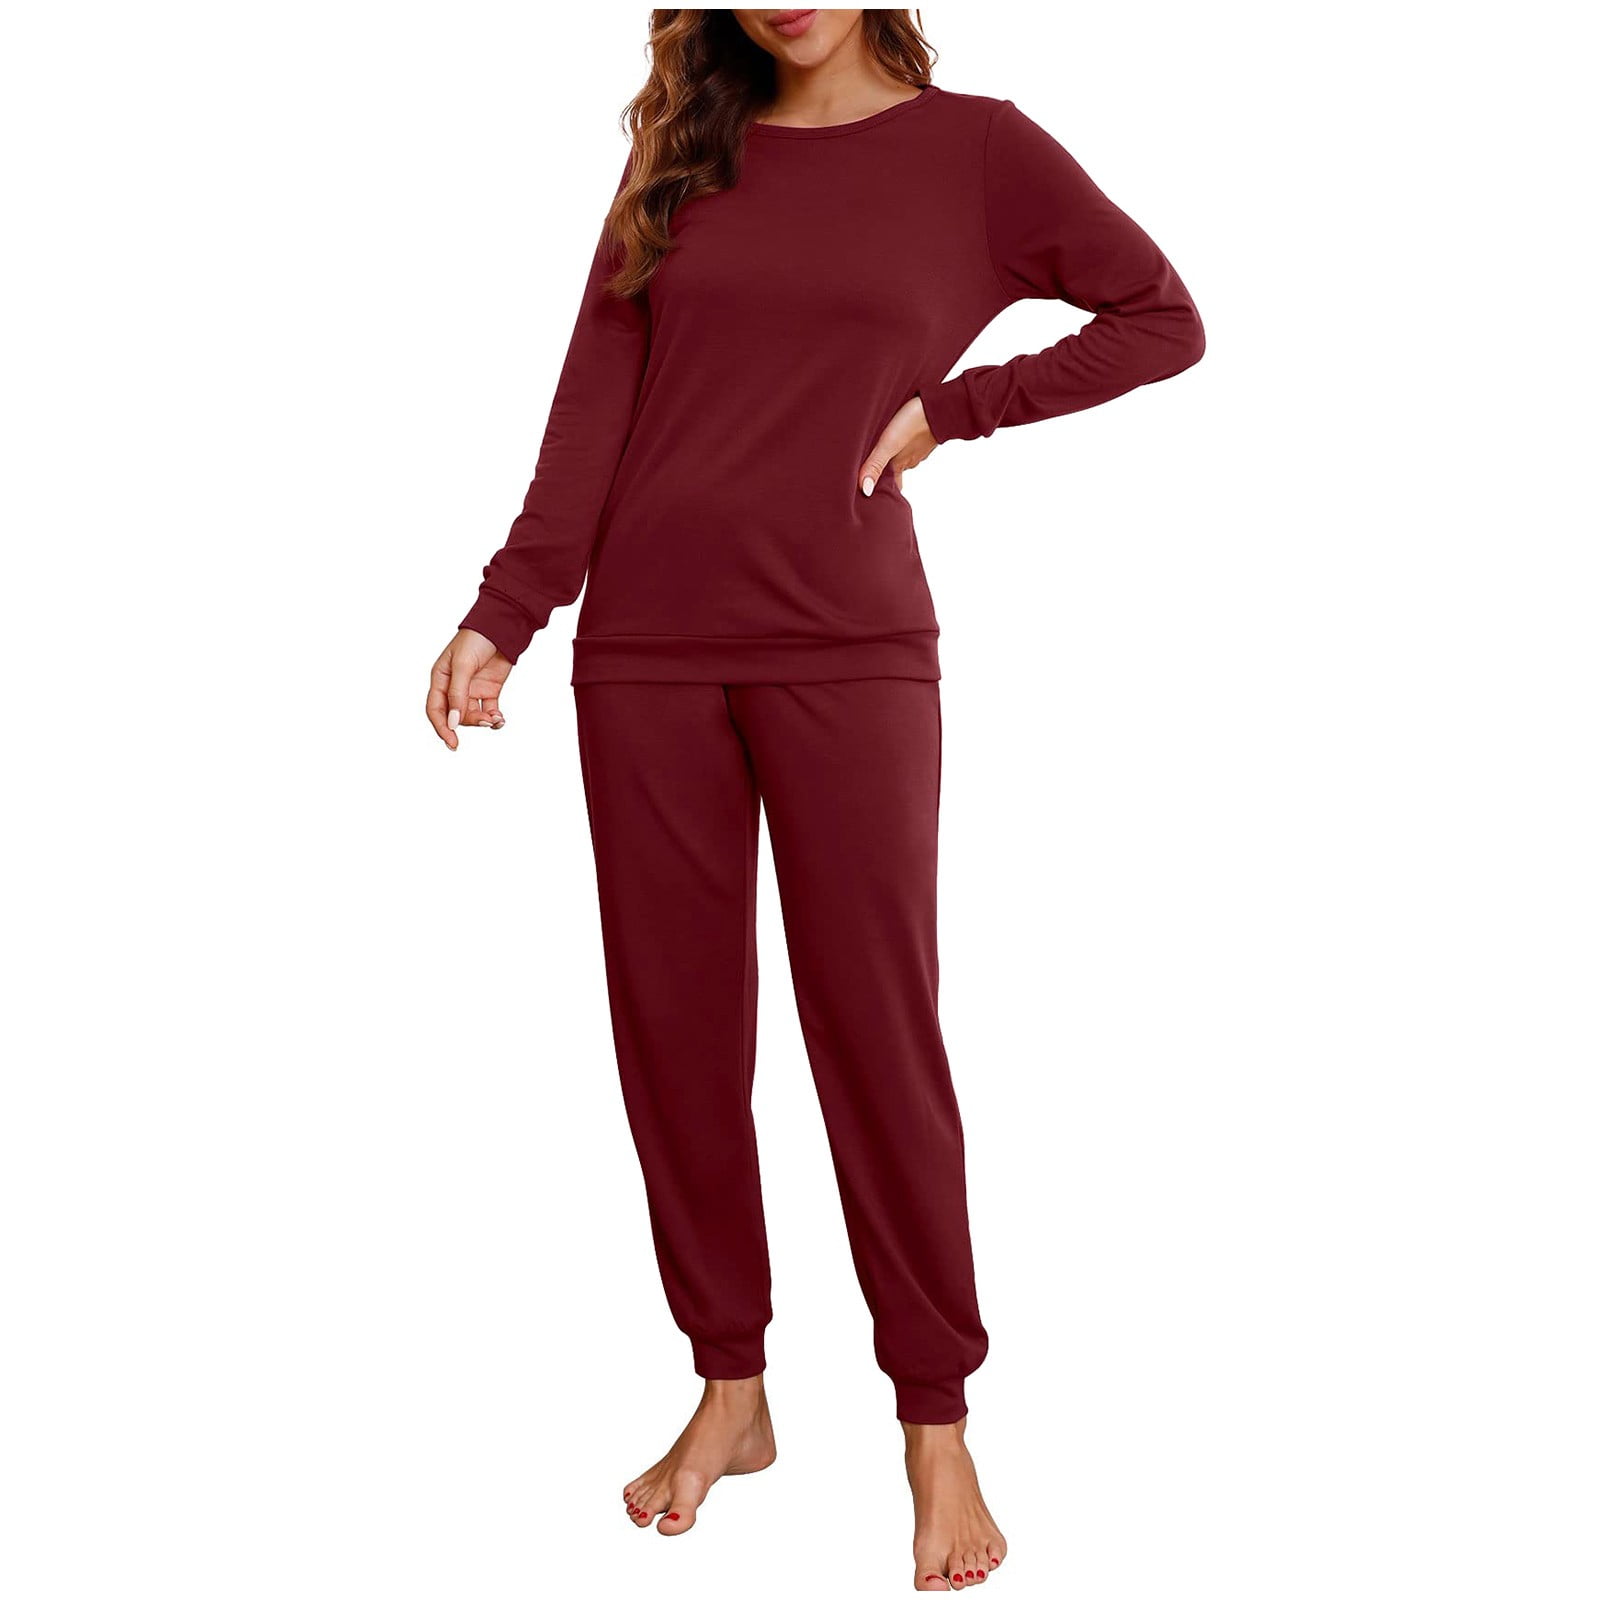 Lisingtool Pajamas for Women Set Womens Pajama Set Long Sleeve Sleepwear  Nightwear Soft Sets with Pockets Pajama Pants Wine